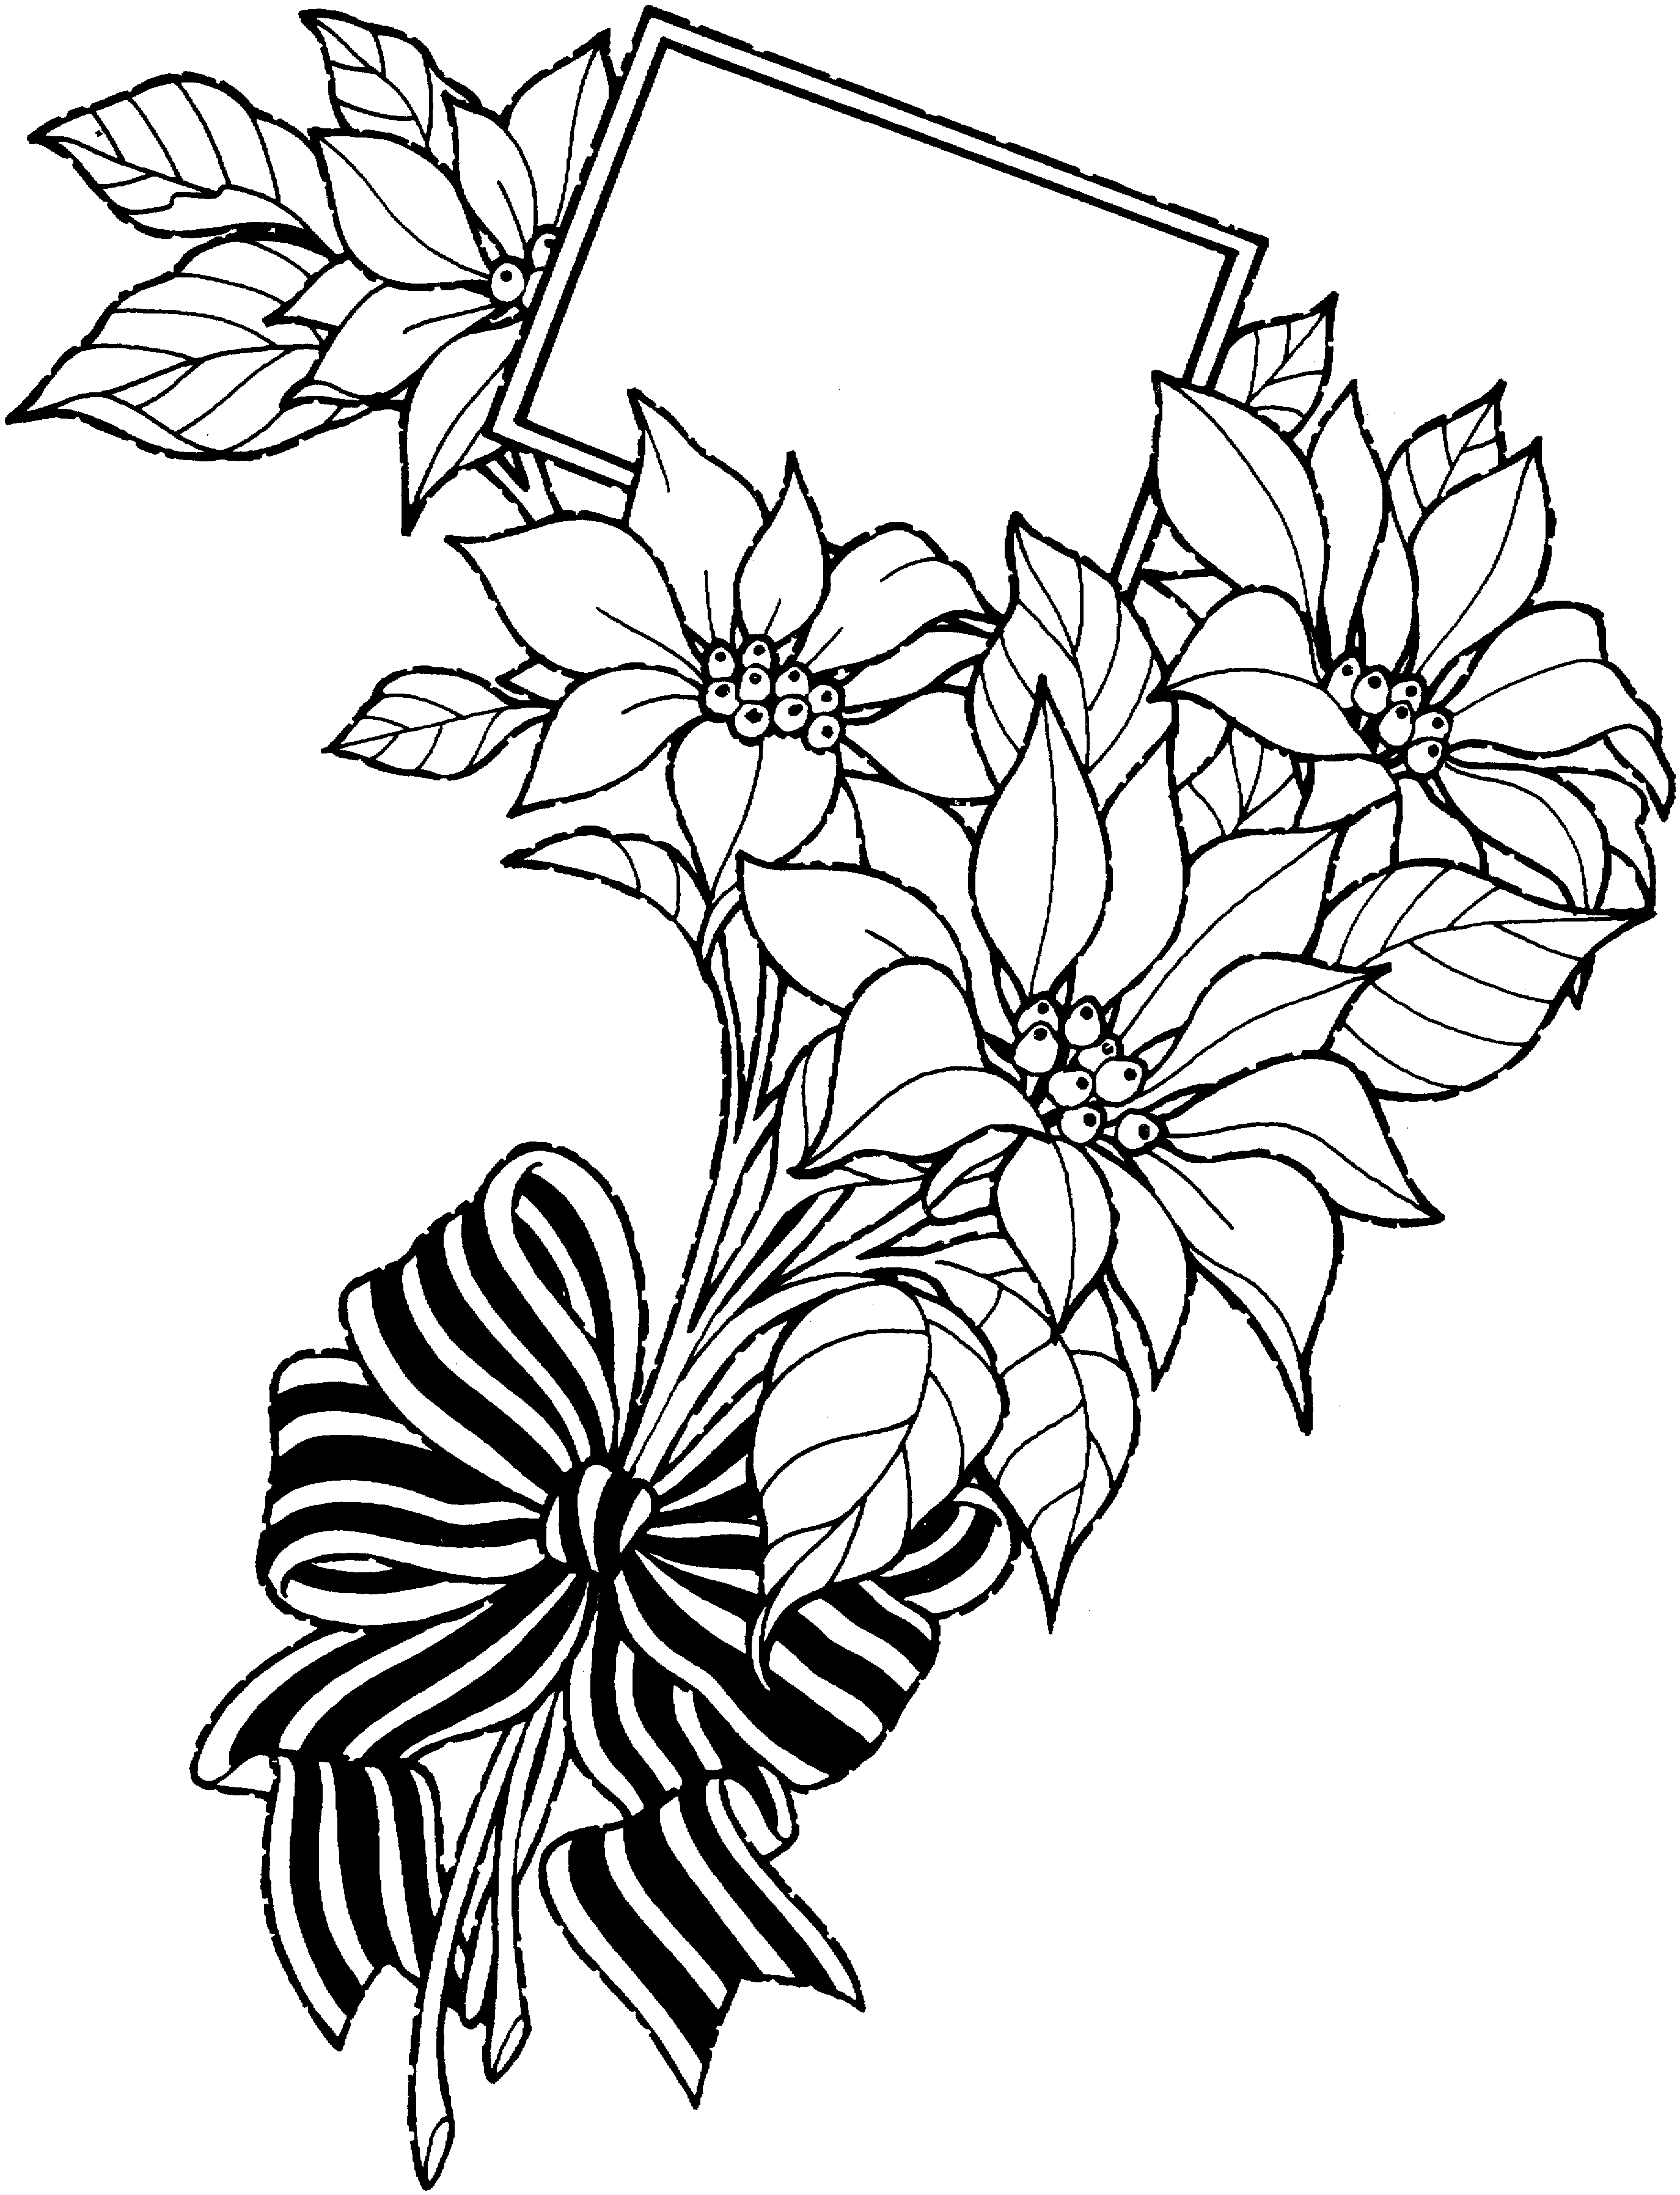 Flower Bouquet Drawing - ClipArt Best